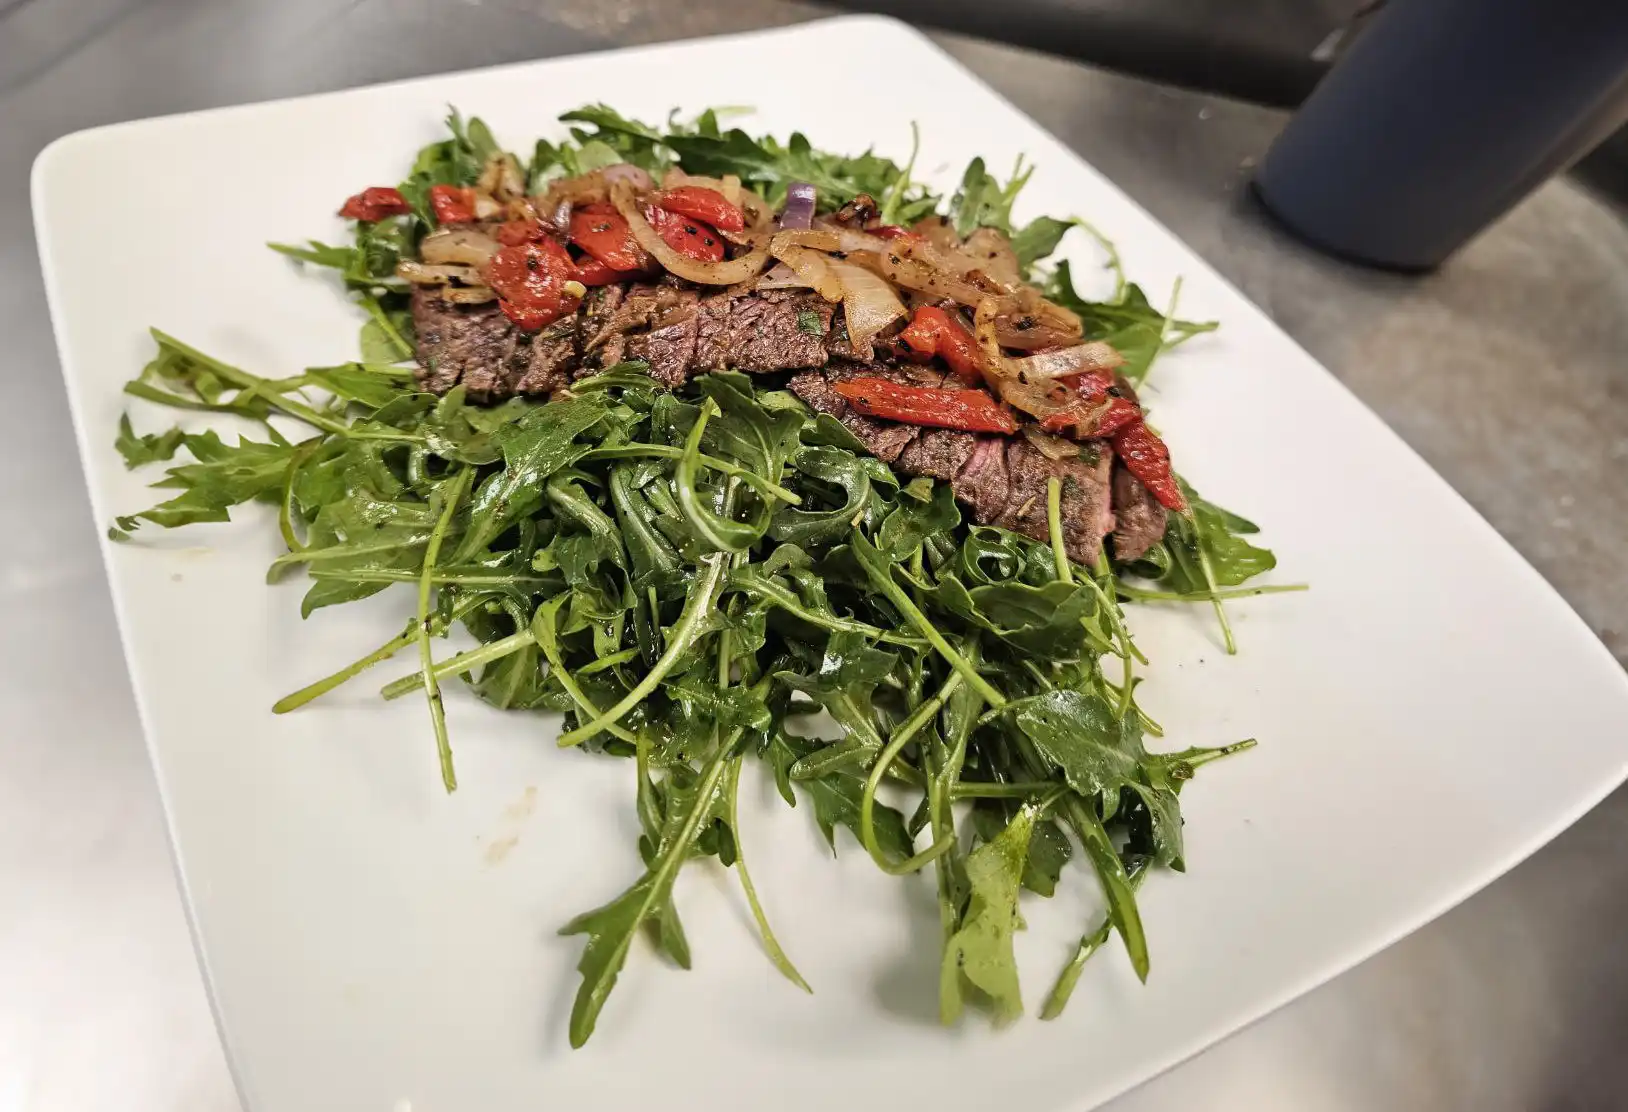 Make This Tonight! Arugula Steak Salad in Minutes